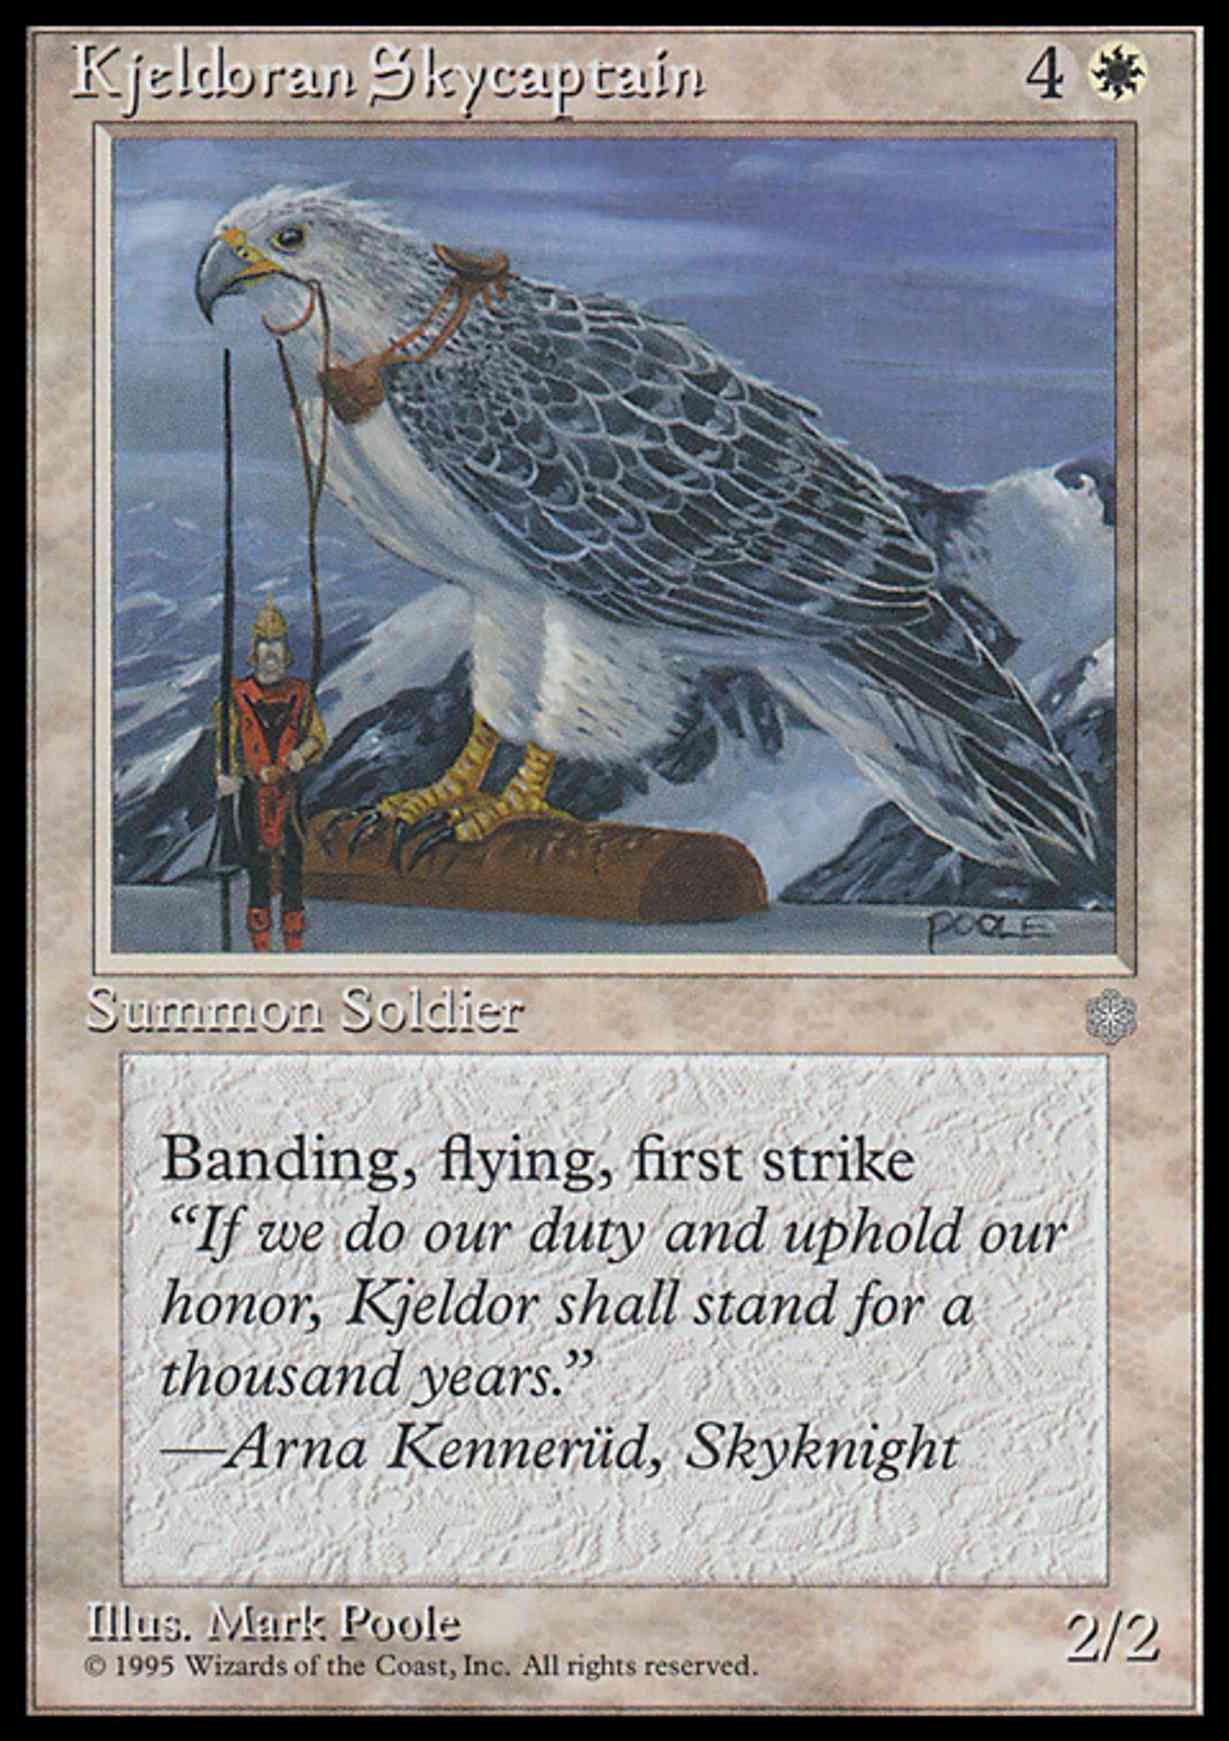 Kjeldoran Skycaptain magic card front